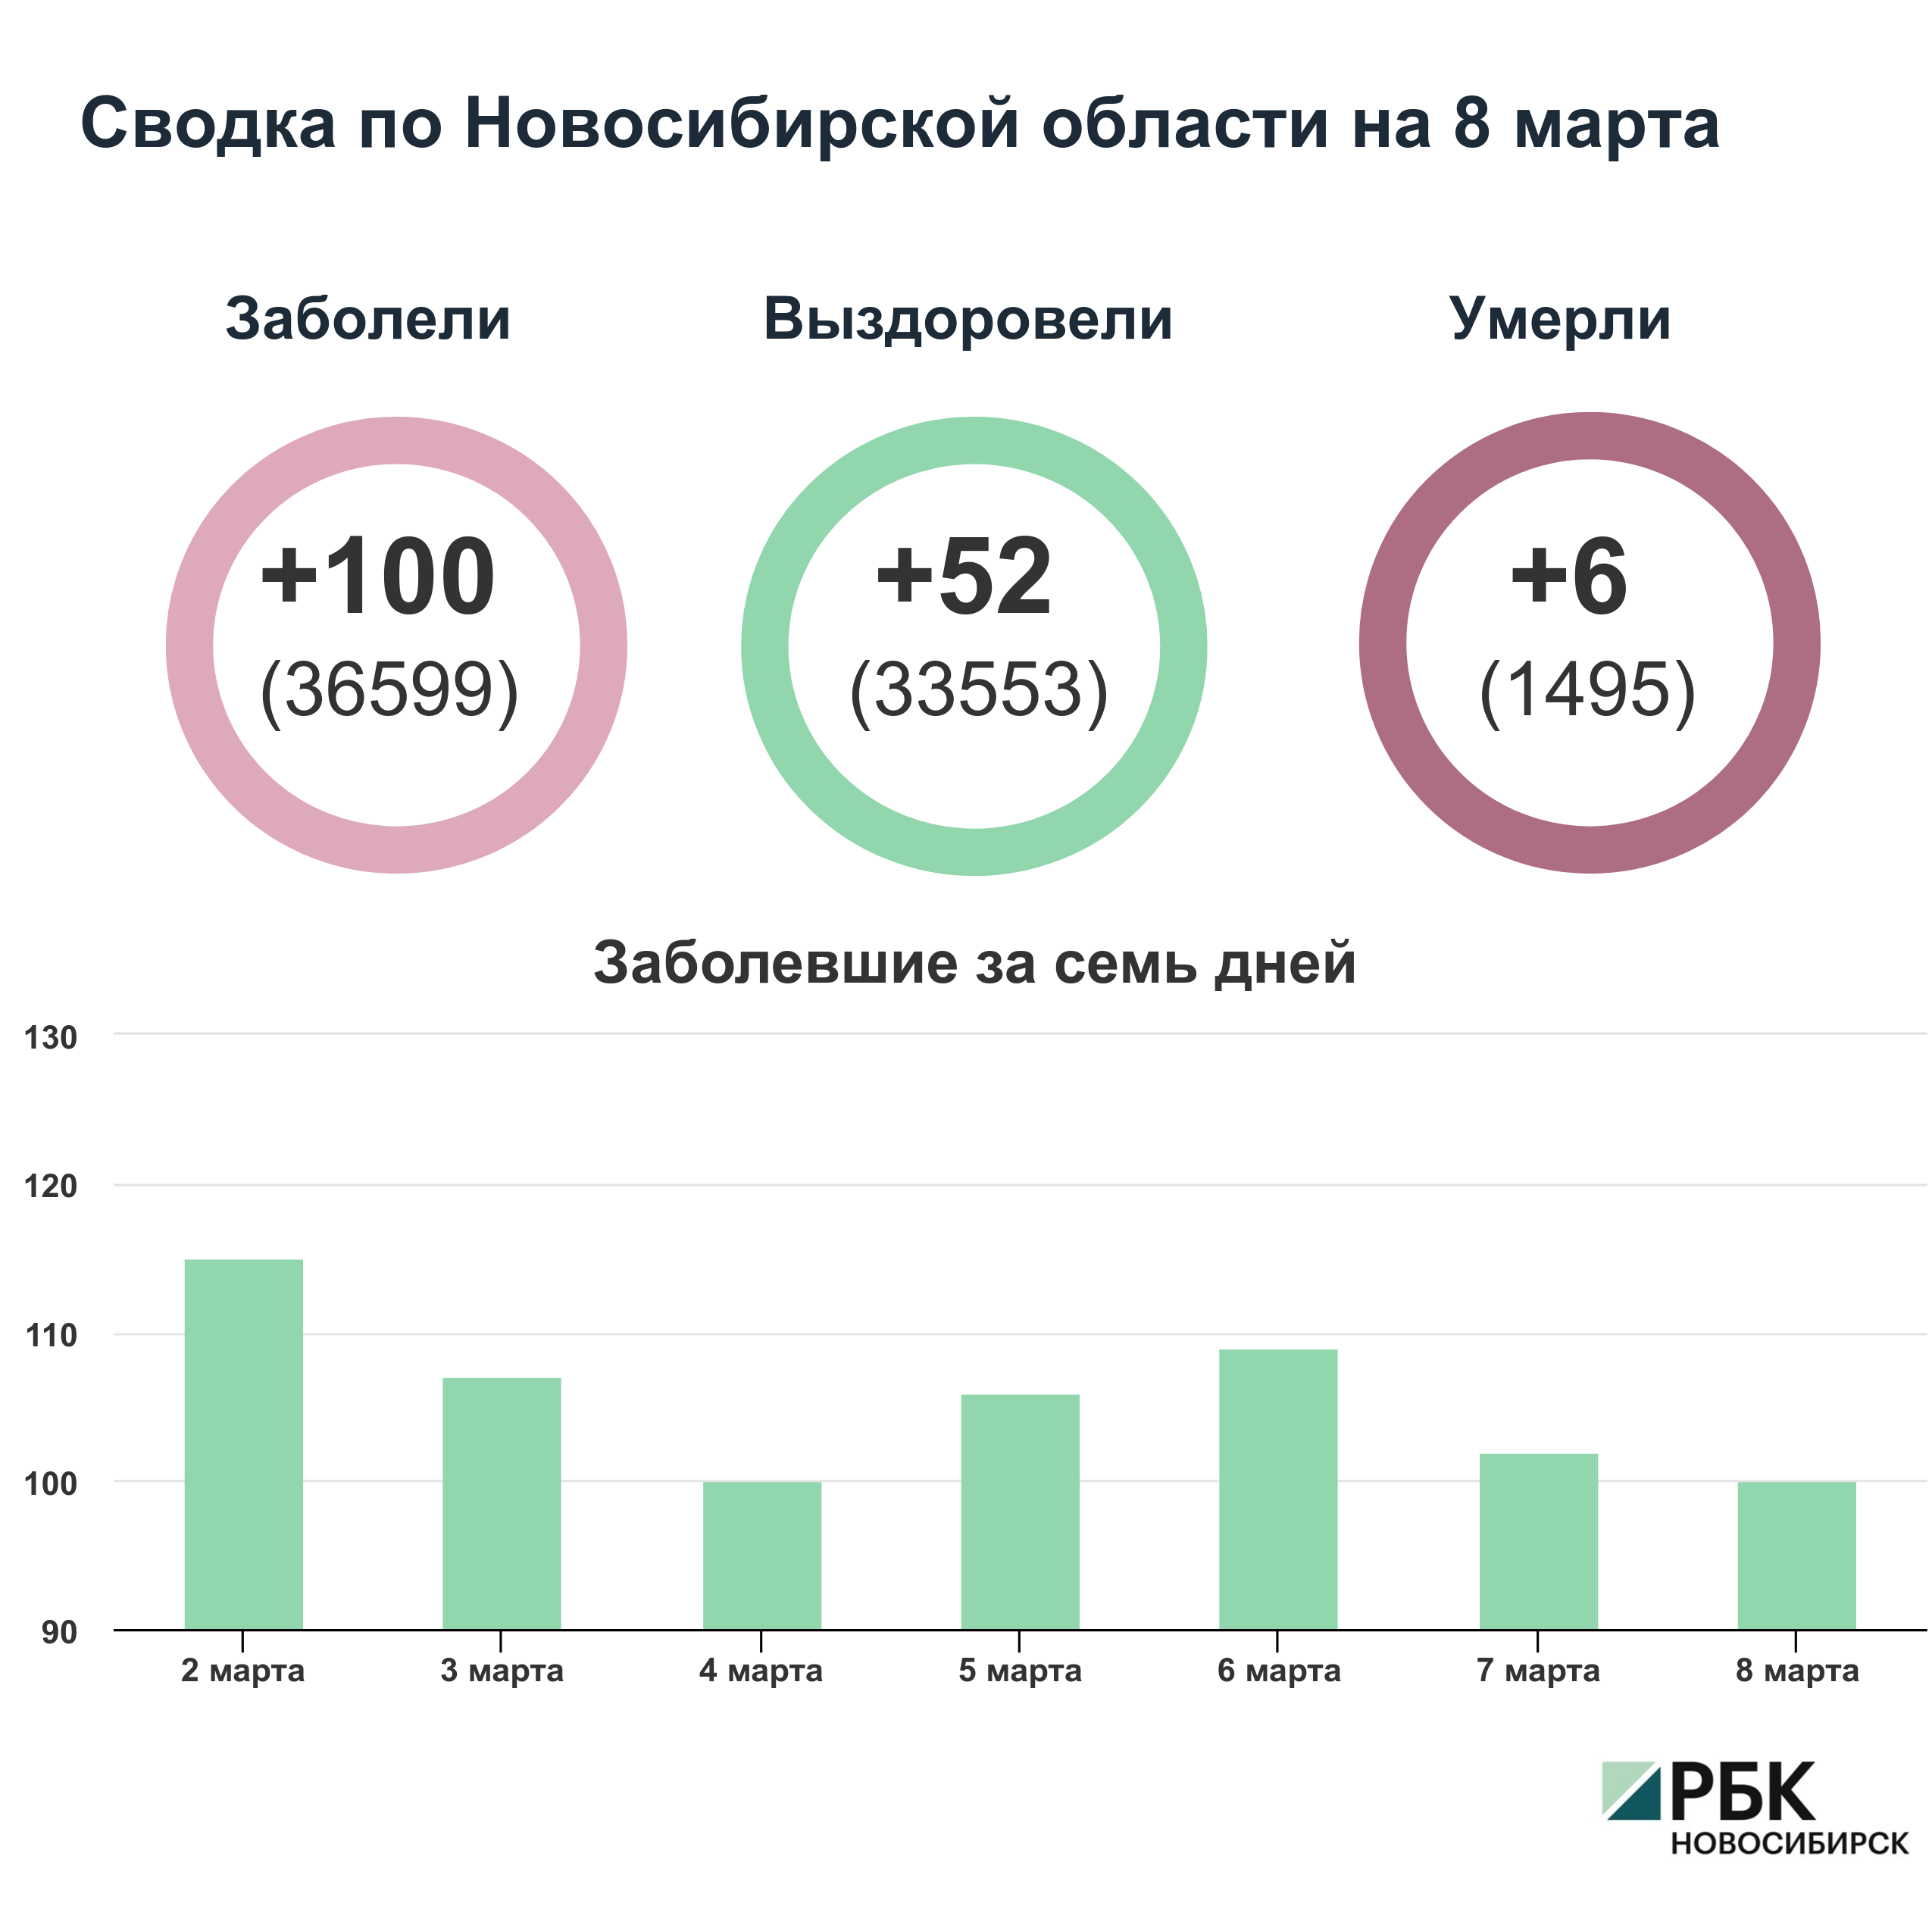 Коронавирус в Новосибирске: сводка на 8 марта